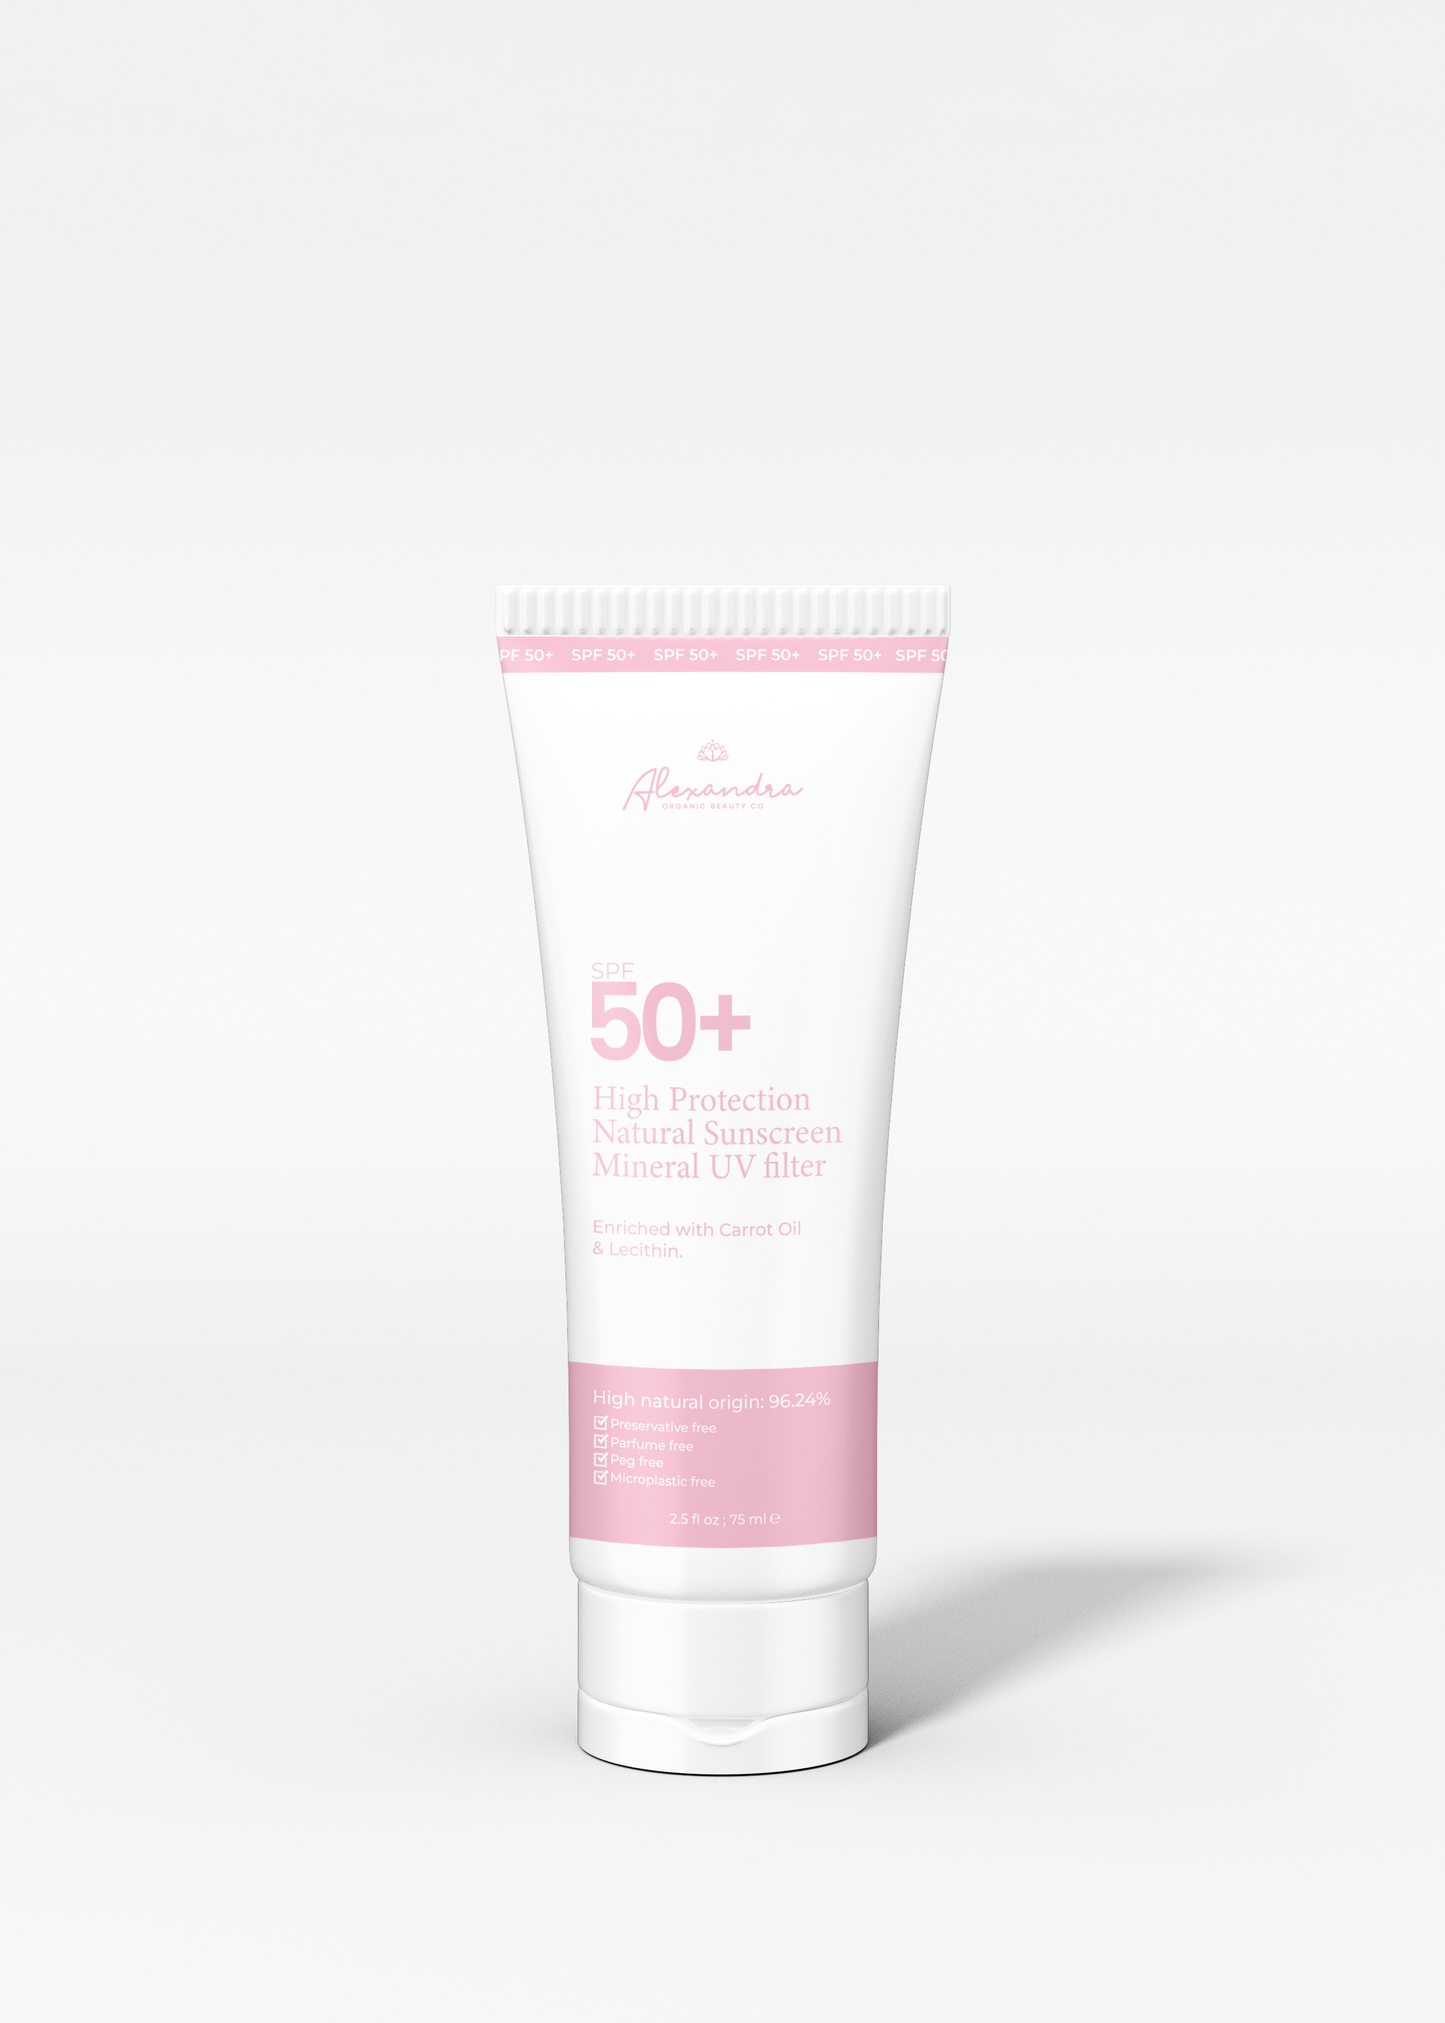 Natural Sunscreen SPF 50+